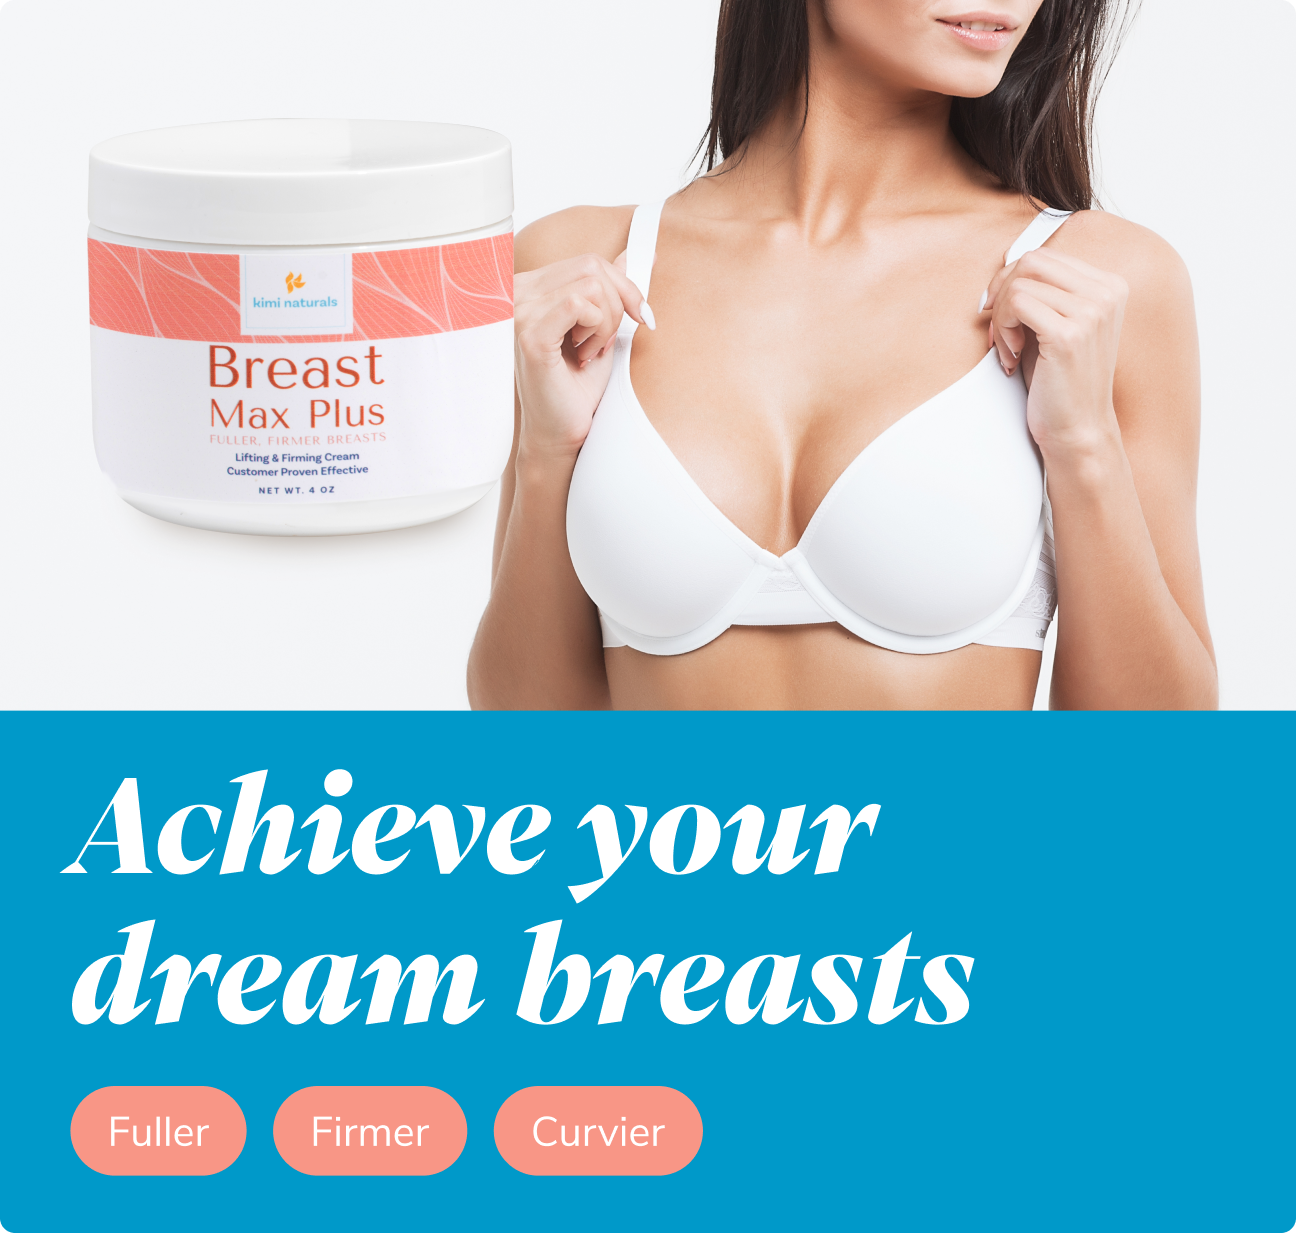 Breast Max Plus Cream - Natural Breast Enhancement Cream from Kimi Naturals